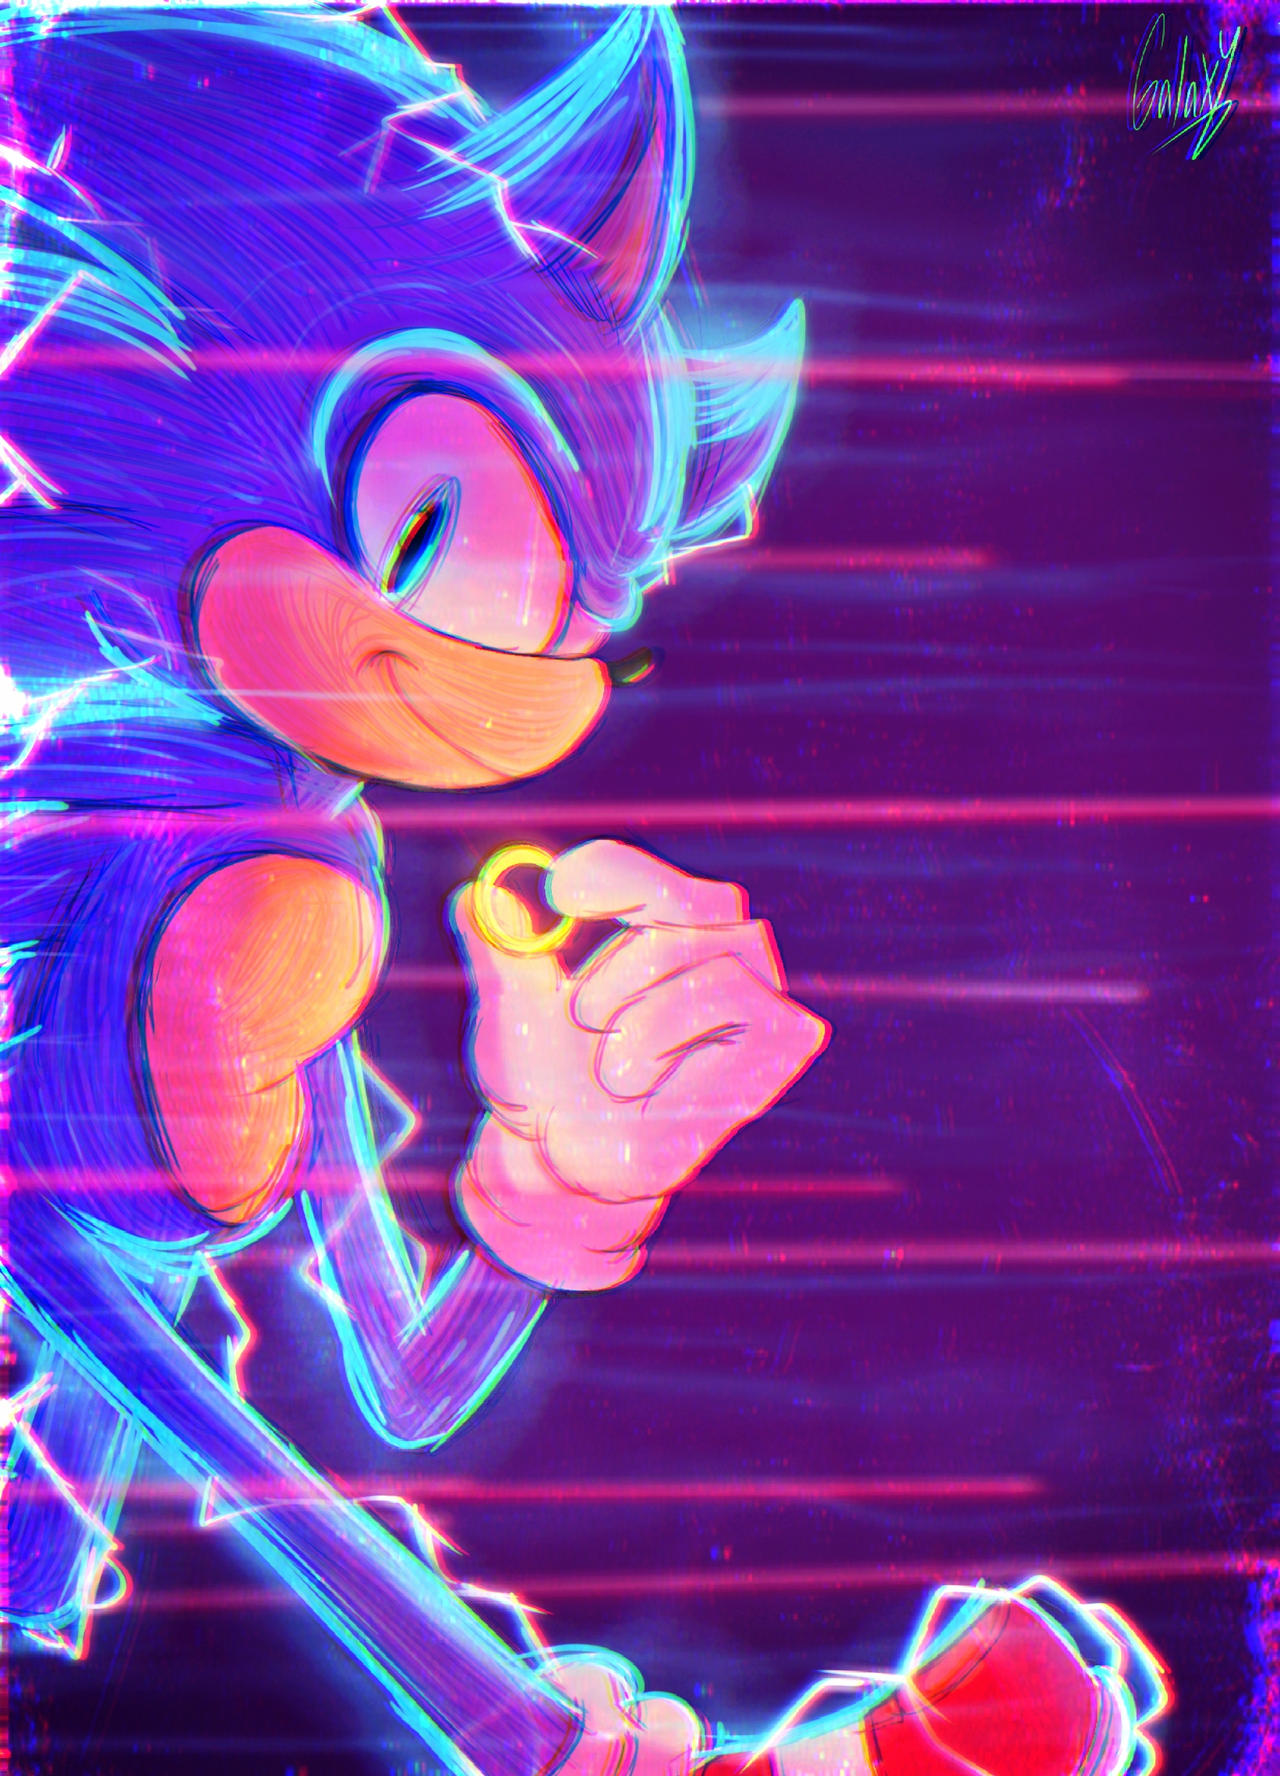 Sonic Movie Poster Redo! by JLuisJoni on DeviantArt